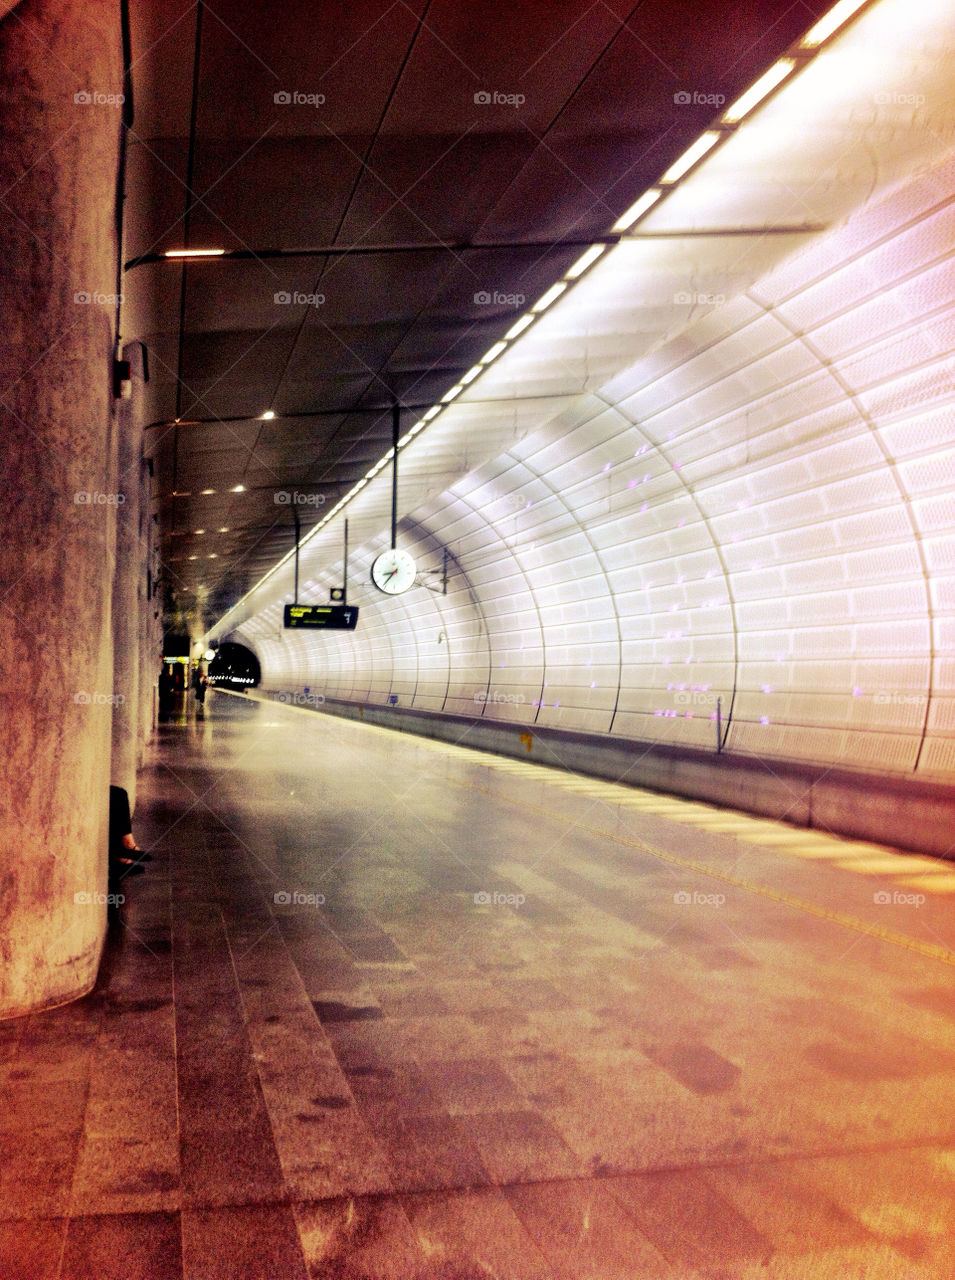 malmö underground travel station by chris68